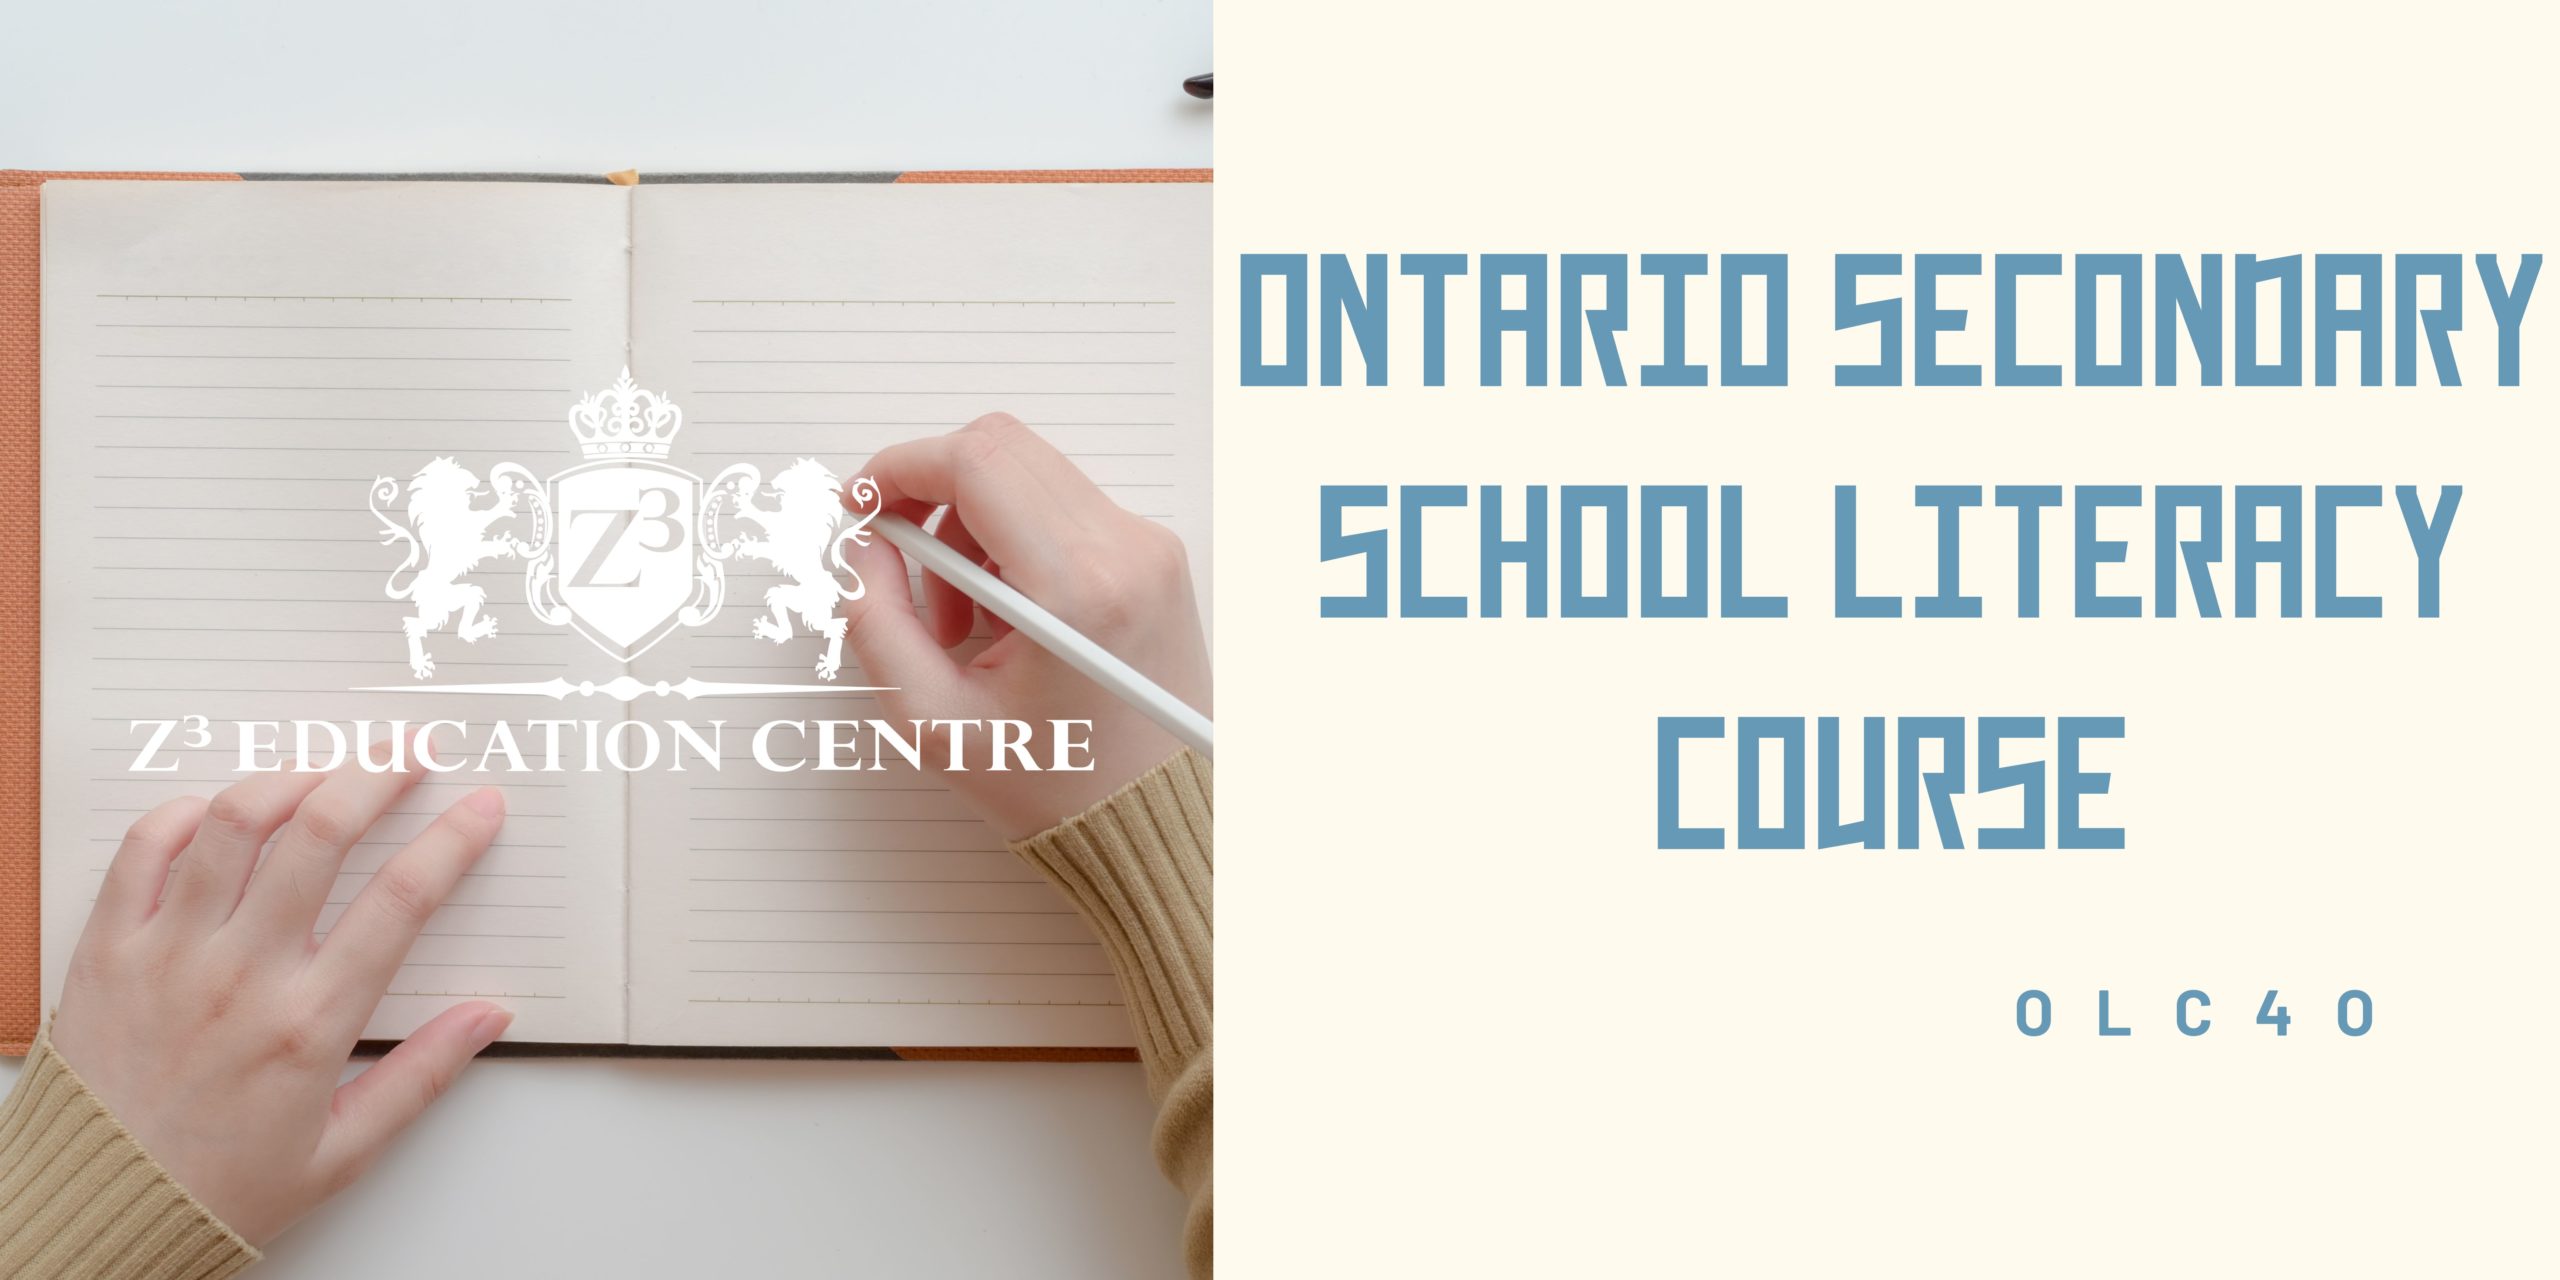 Ontario Secondary School Literacy Course Image